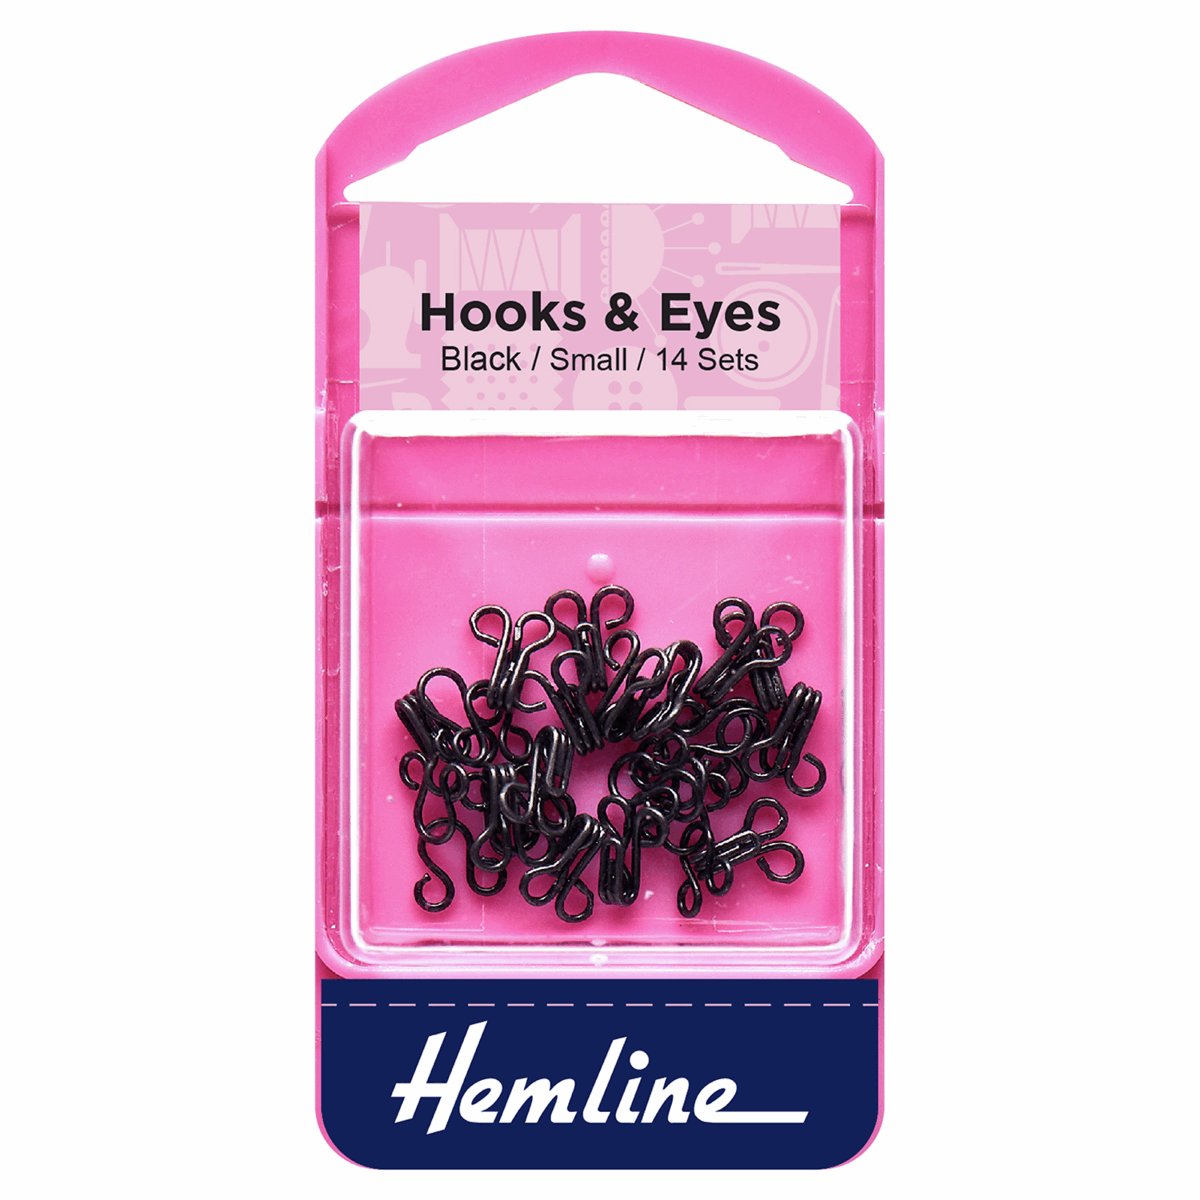 Hemline Black Hook & Eyes - Size 1 (14 Sets)